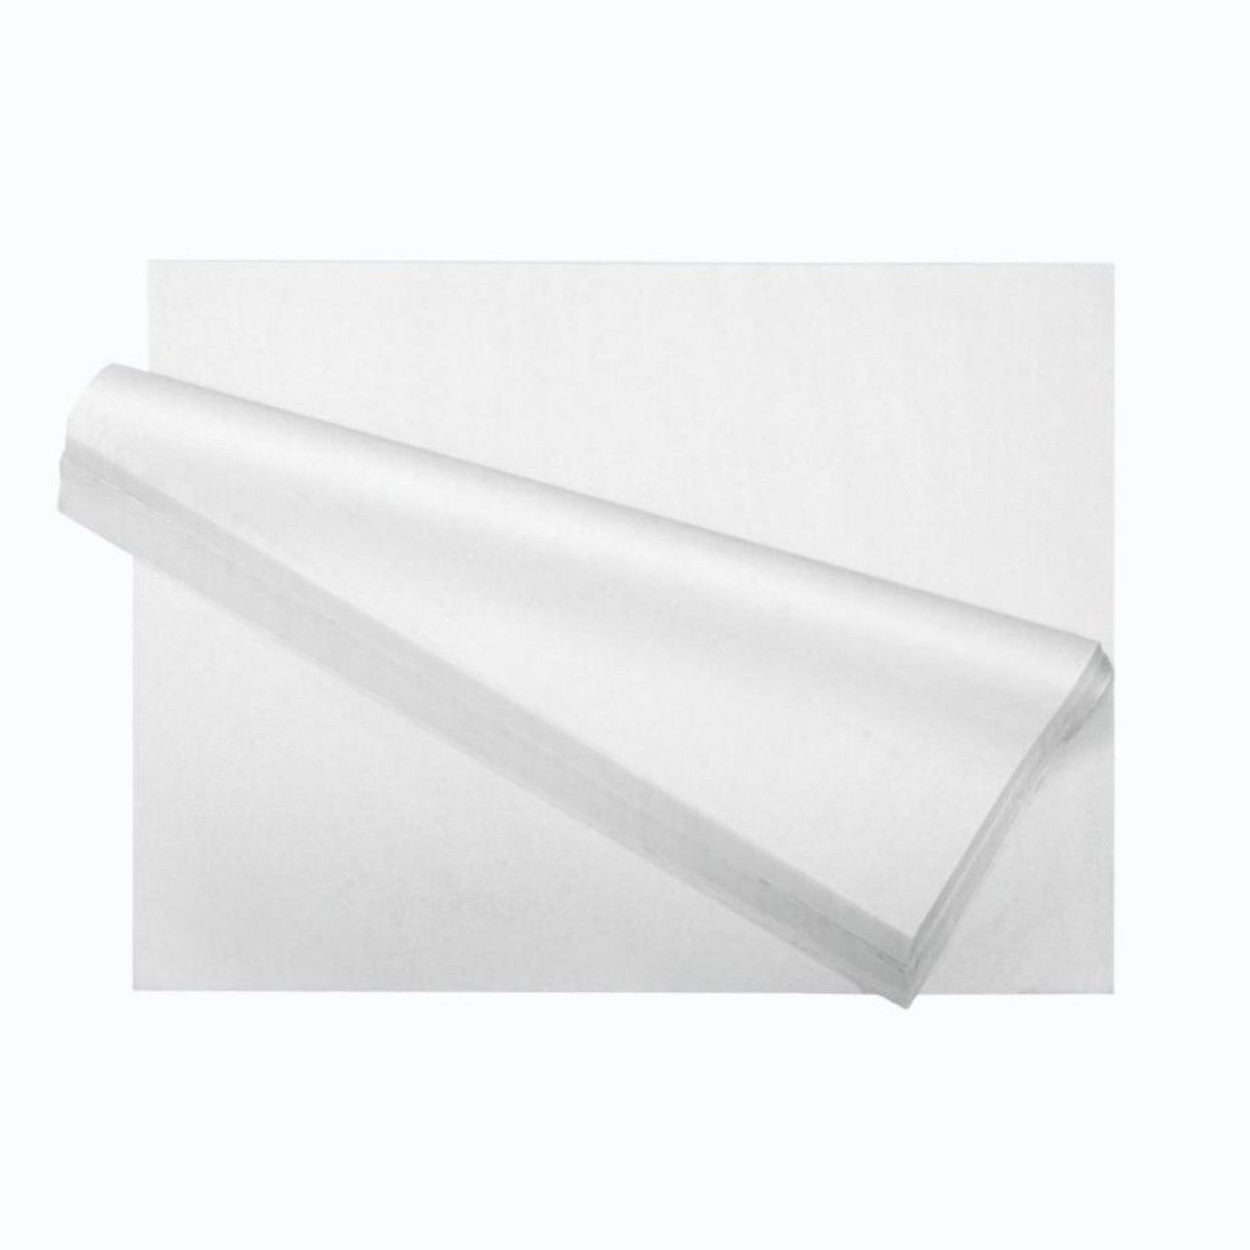 Liphontcta Premium White Tissue Paper 20 X 20 - 100 Sheet Pack